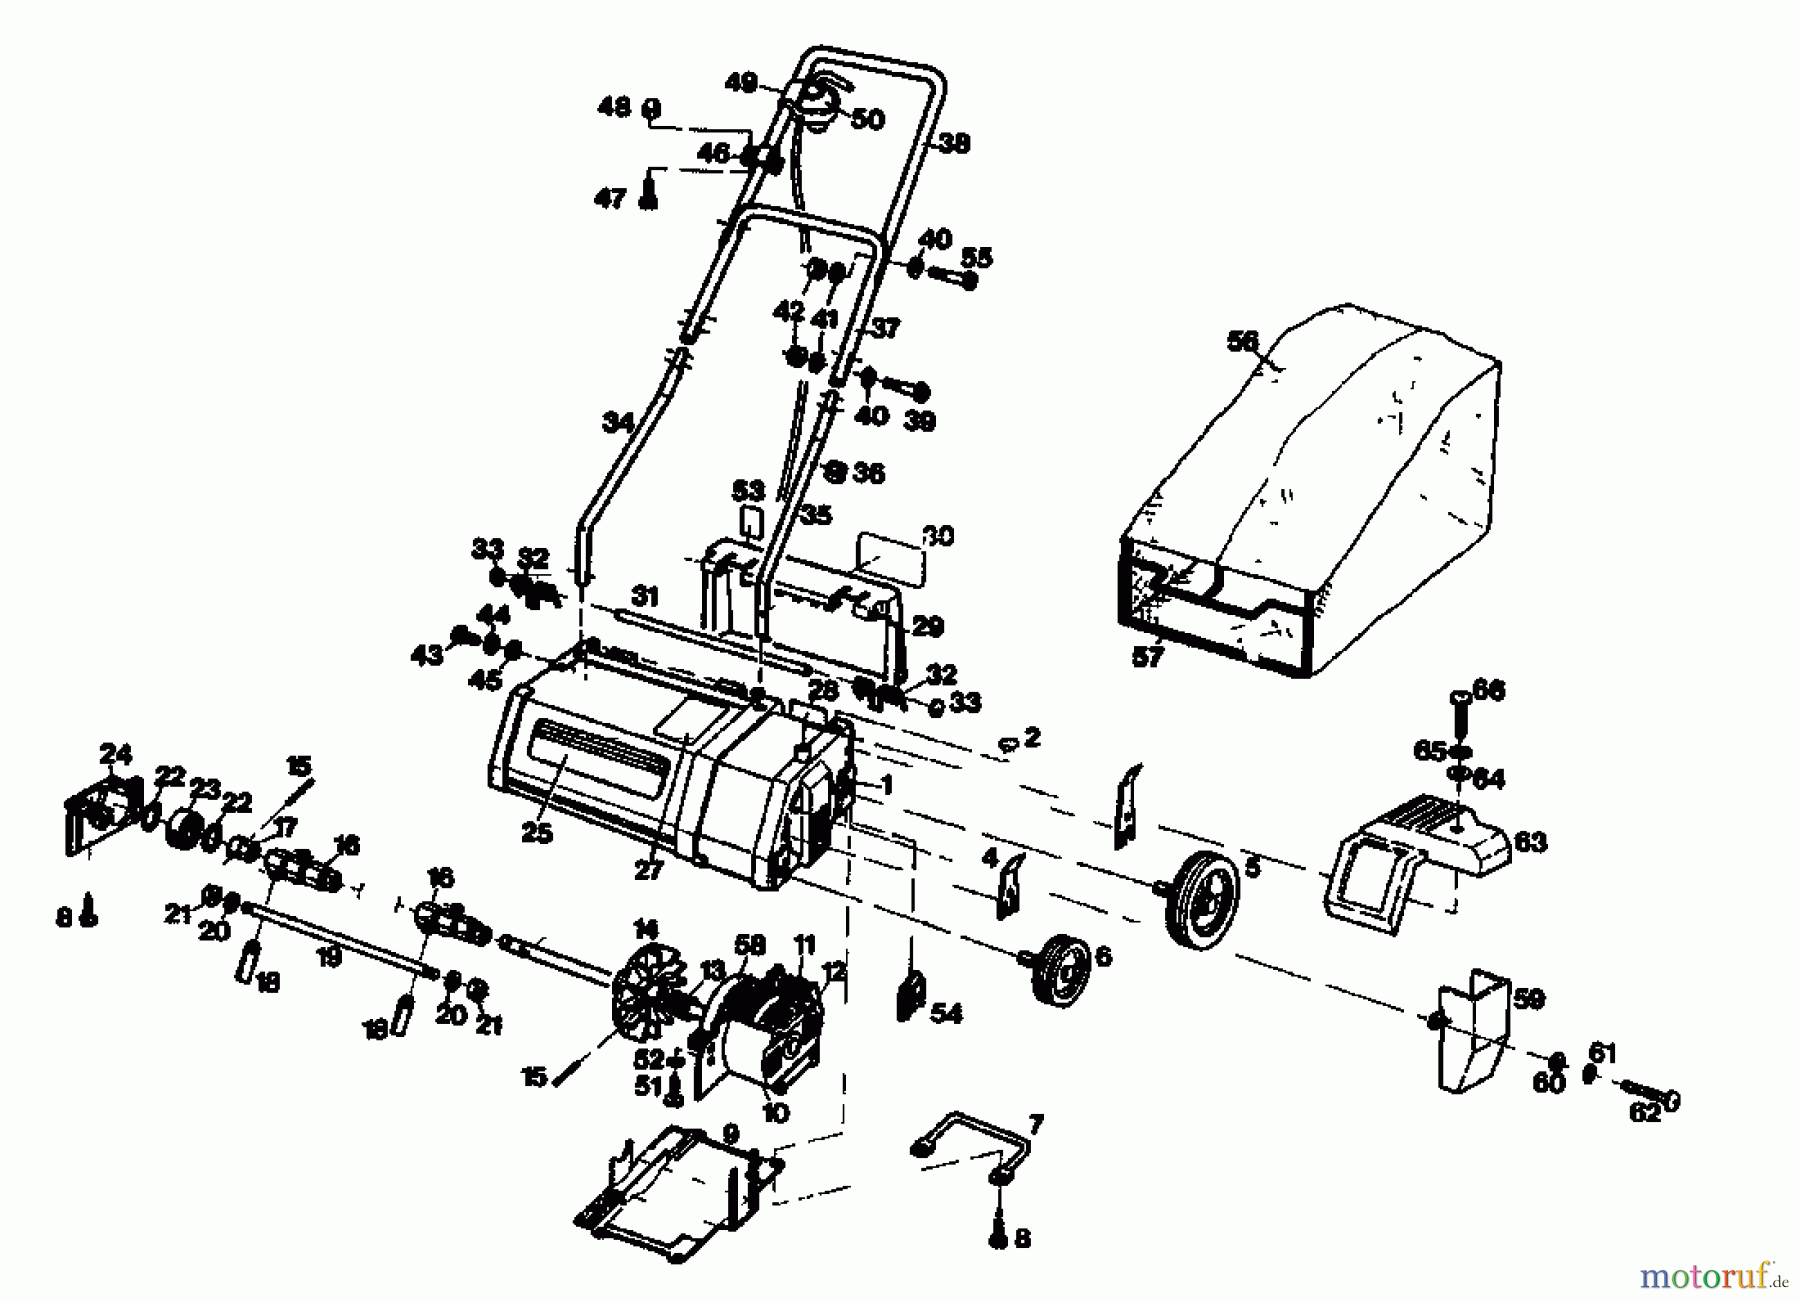  Gutbrod Electric verticutter VE 32 02890.06  (1987) Basic machine